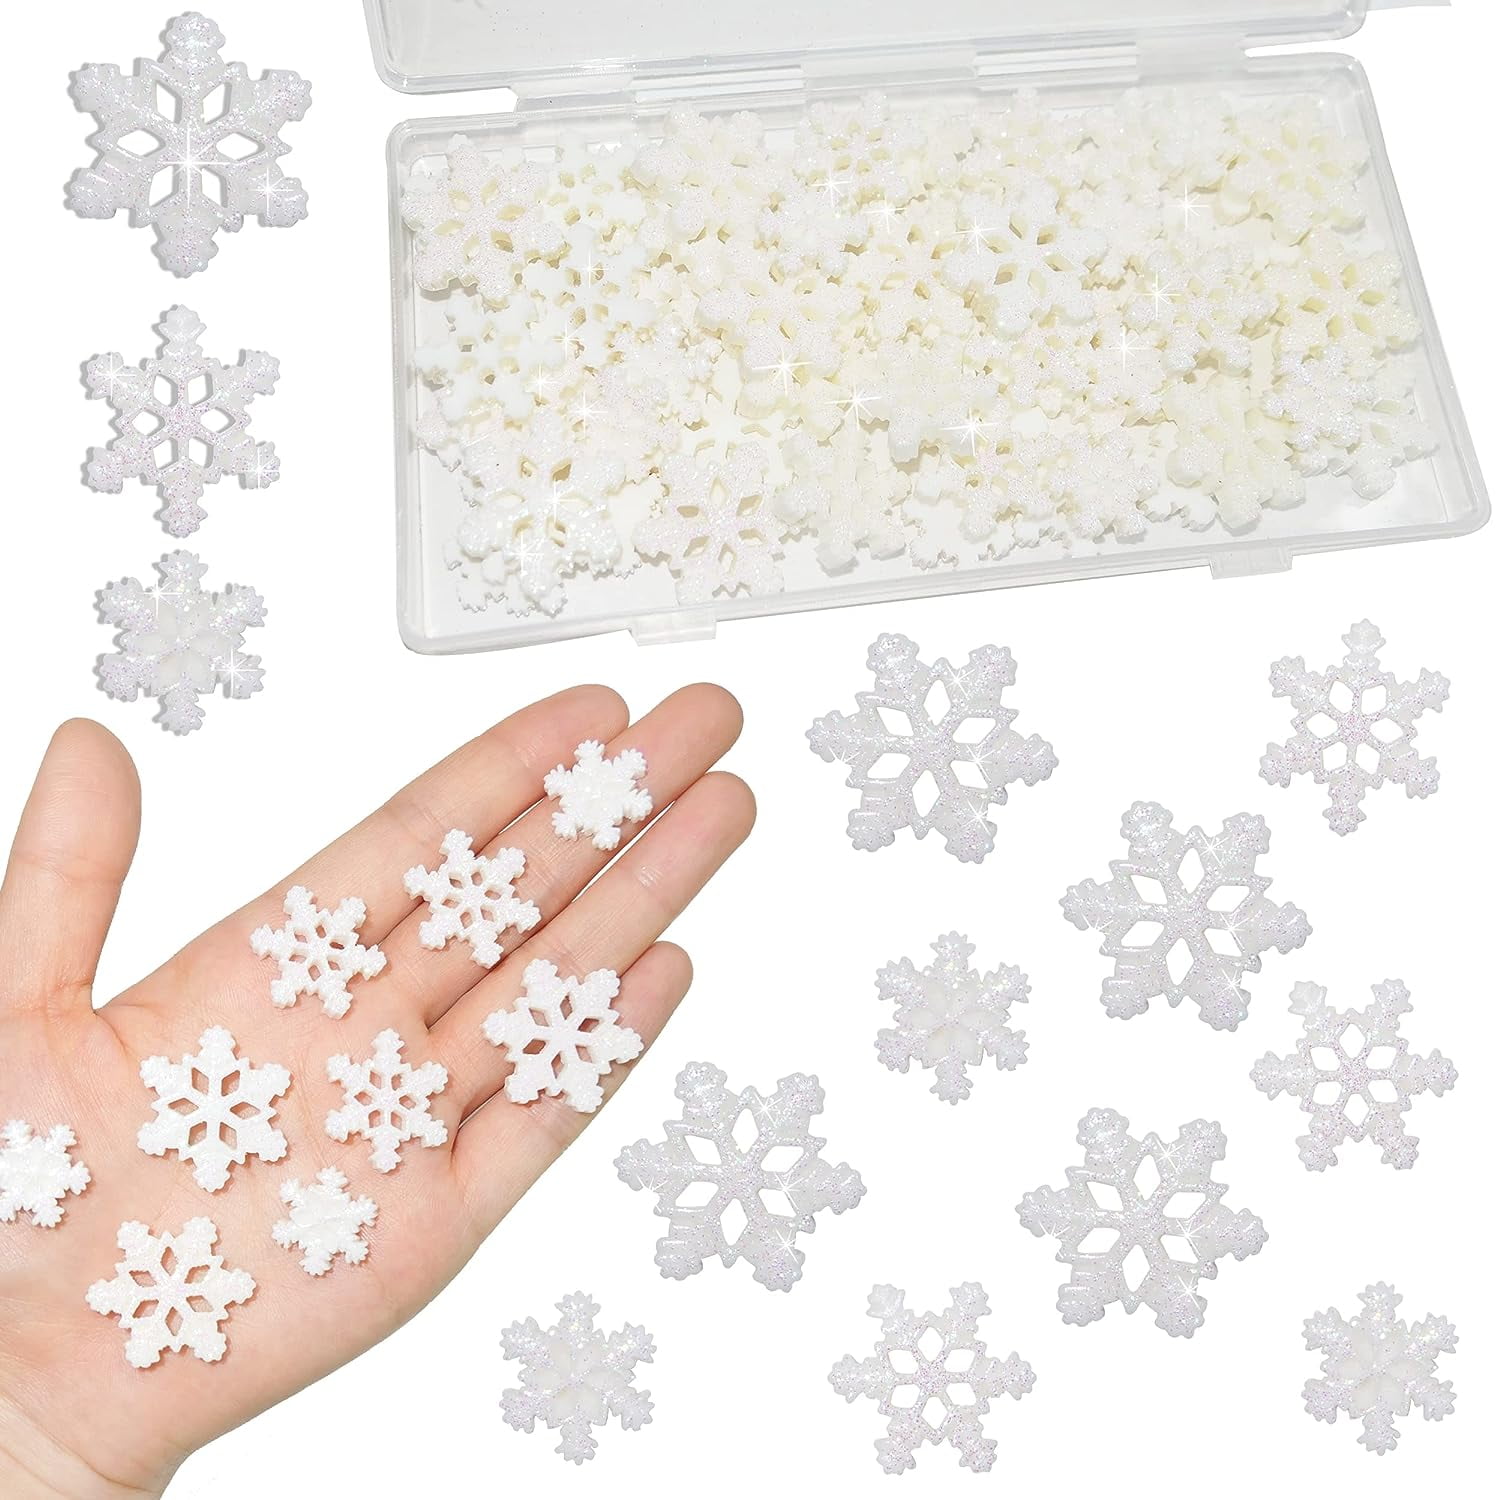 Craft Snowflakes